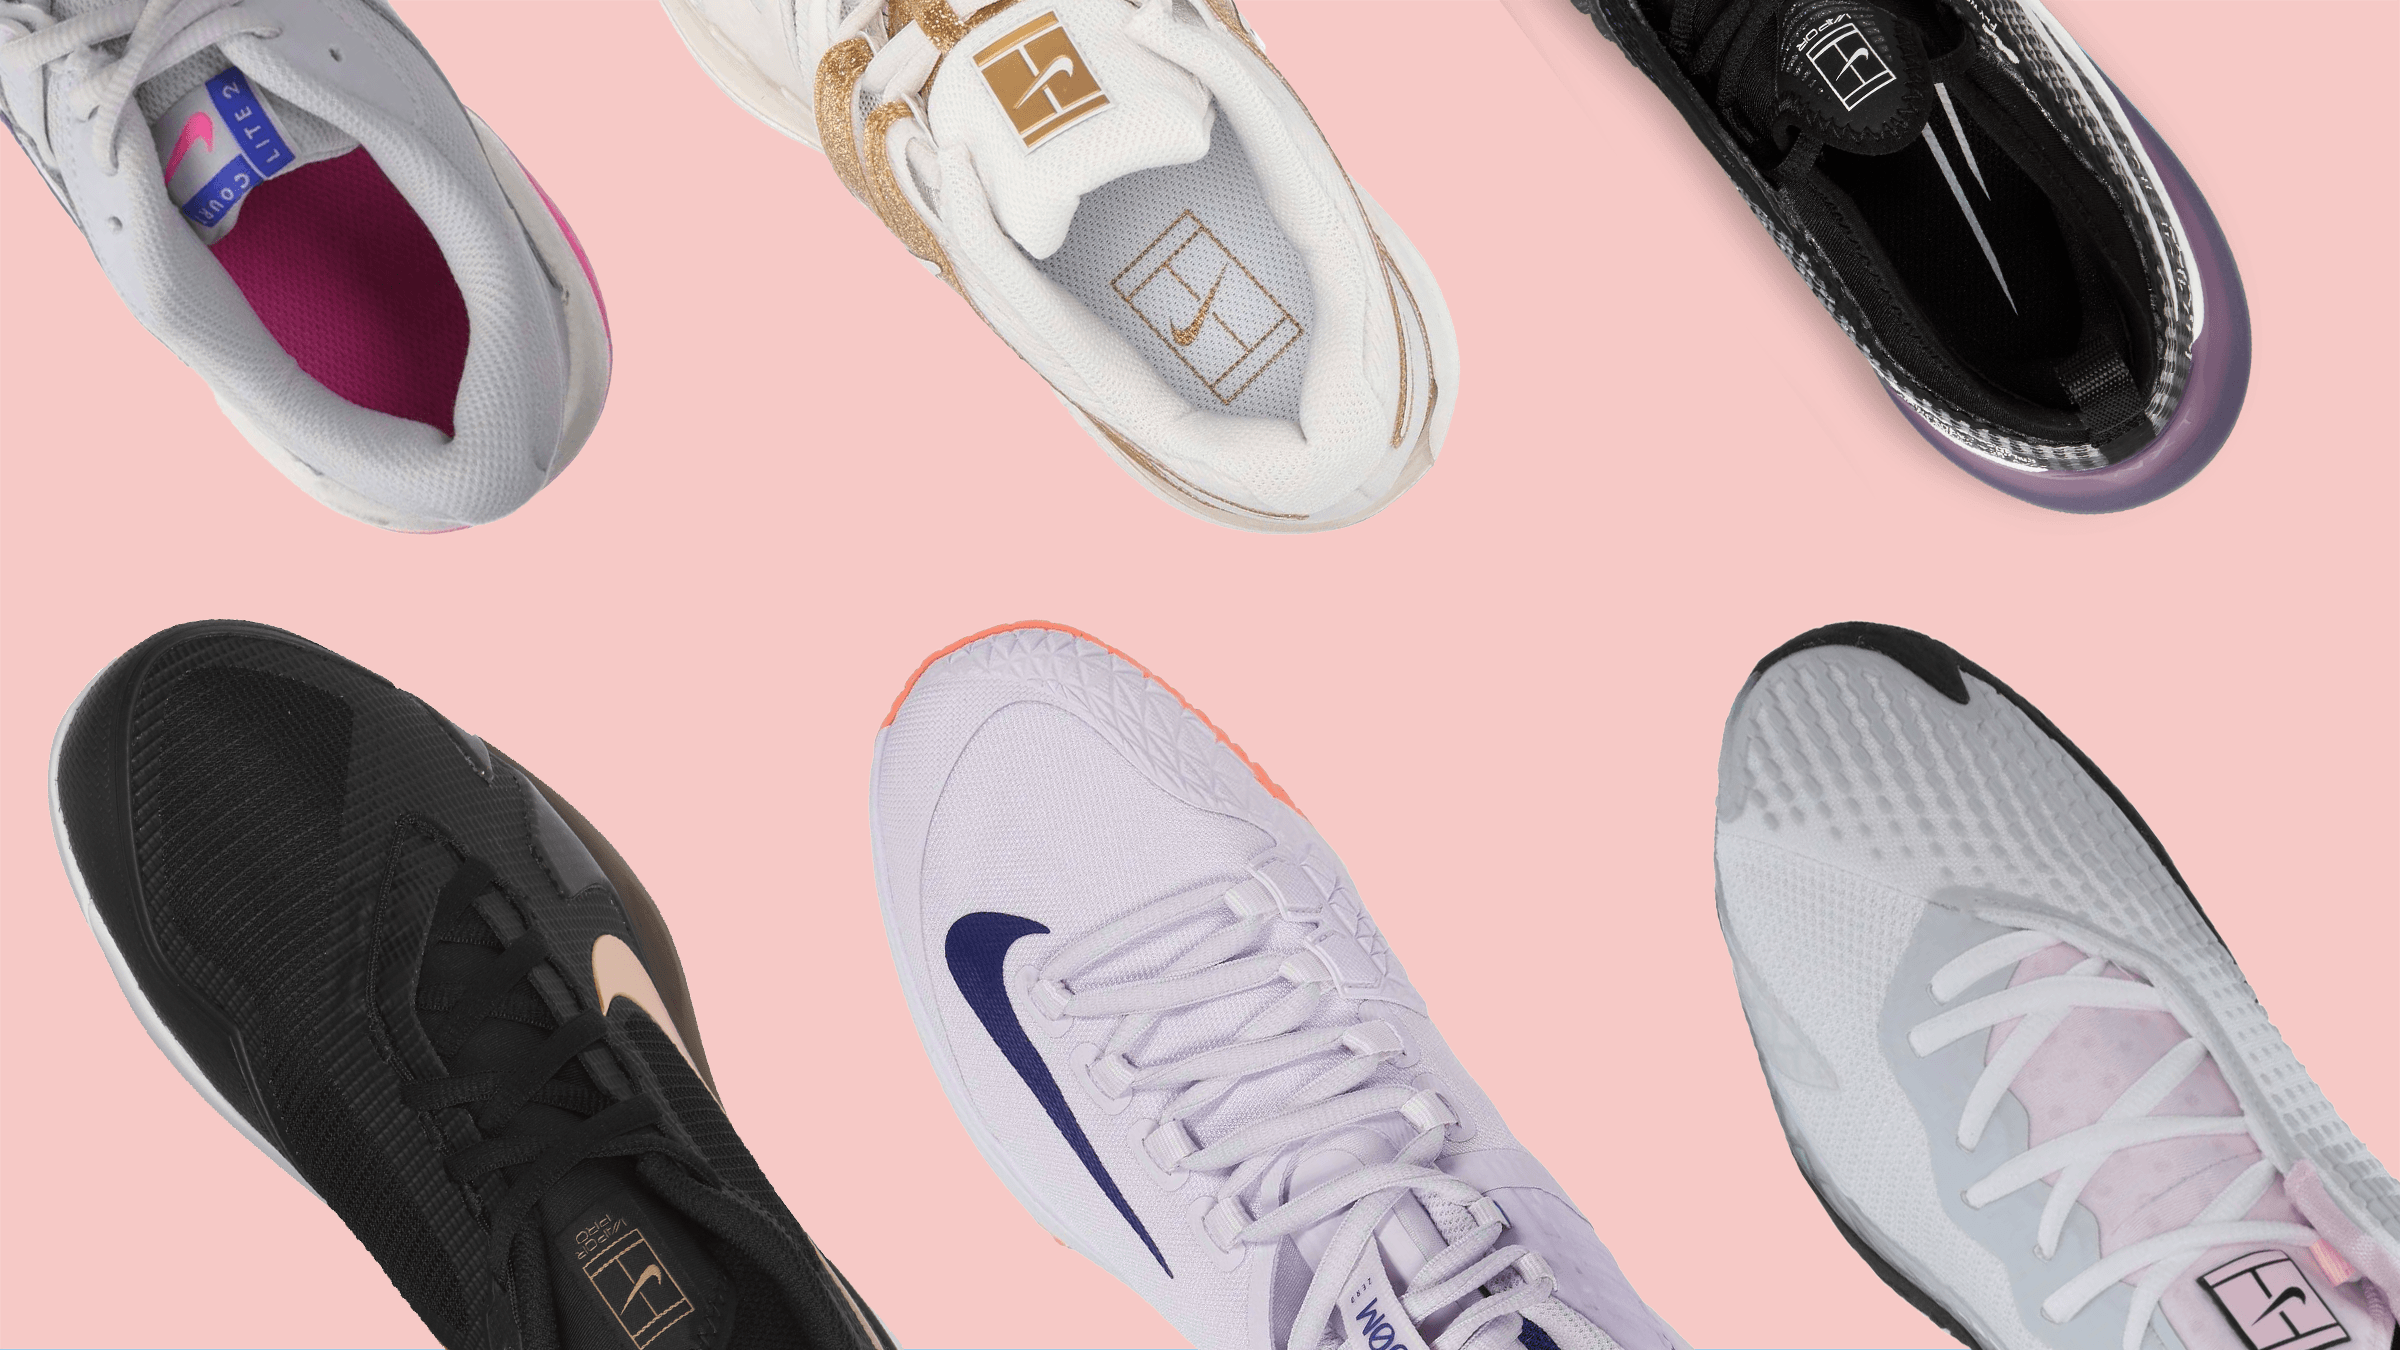 8 Best Nike Tennis Shoes For Women in 2022